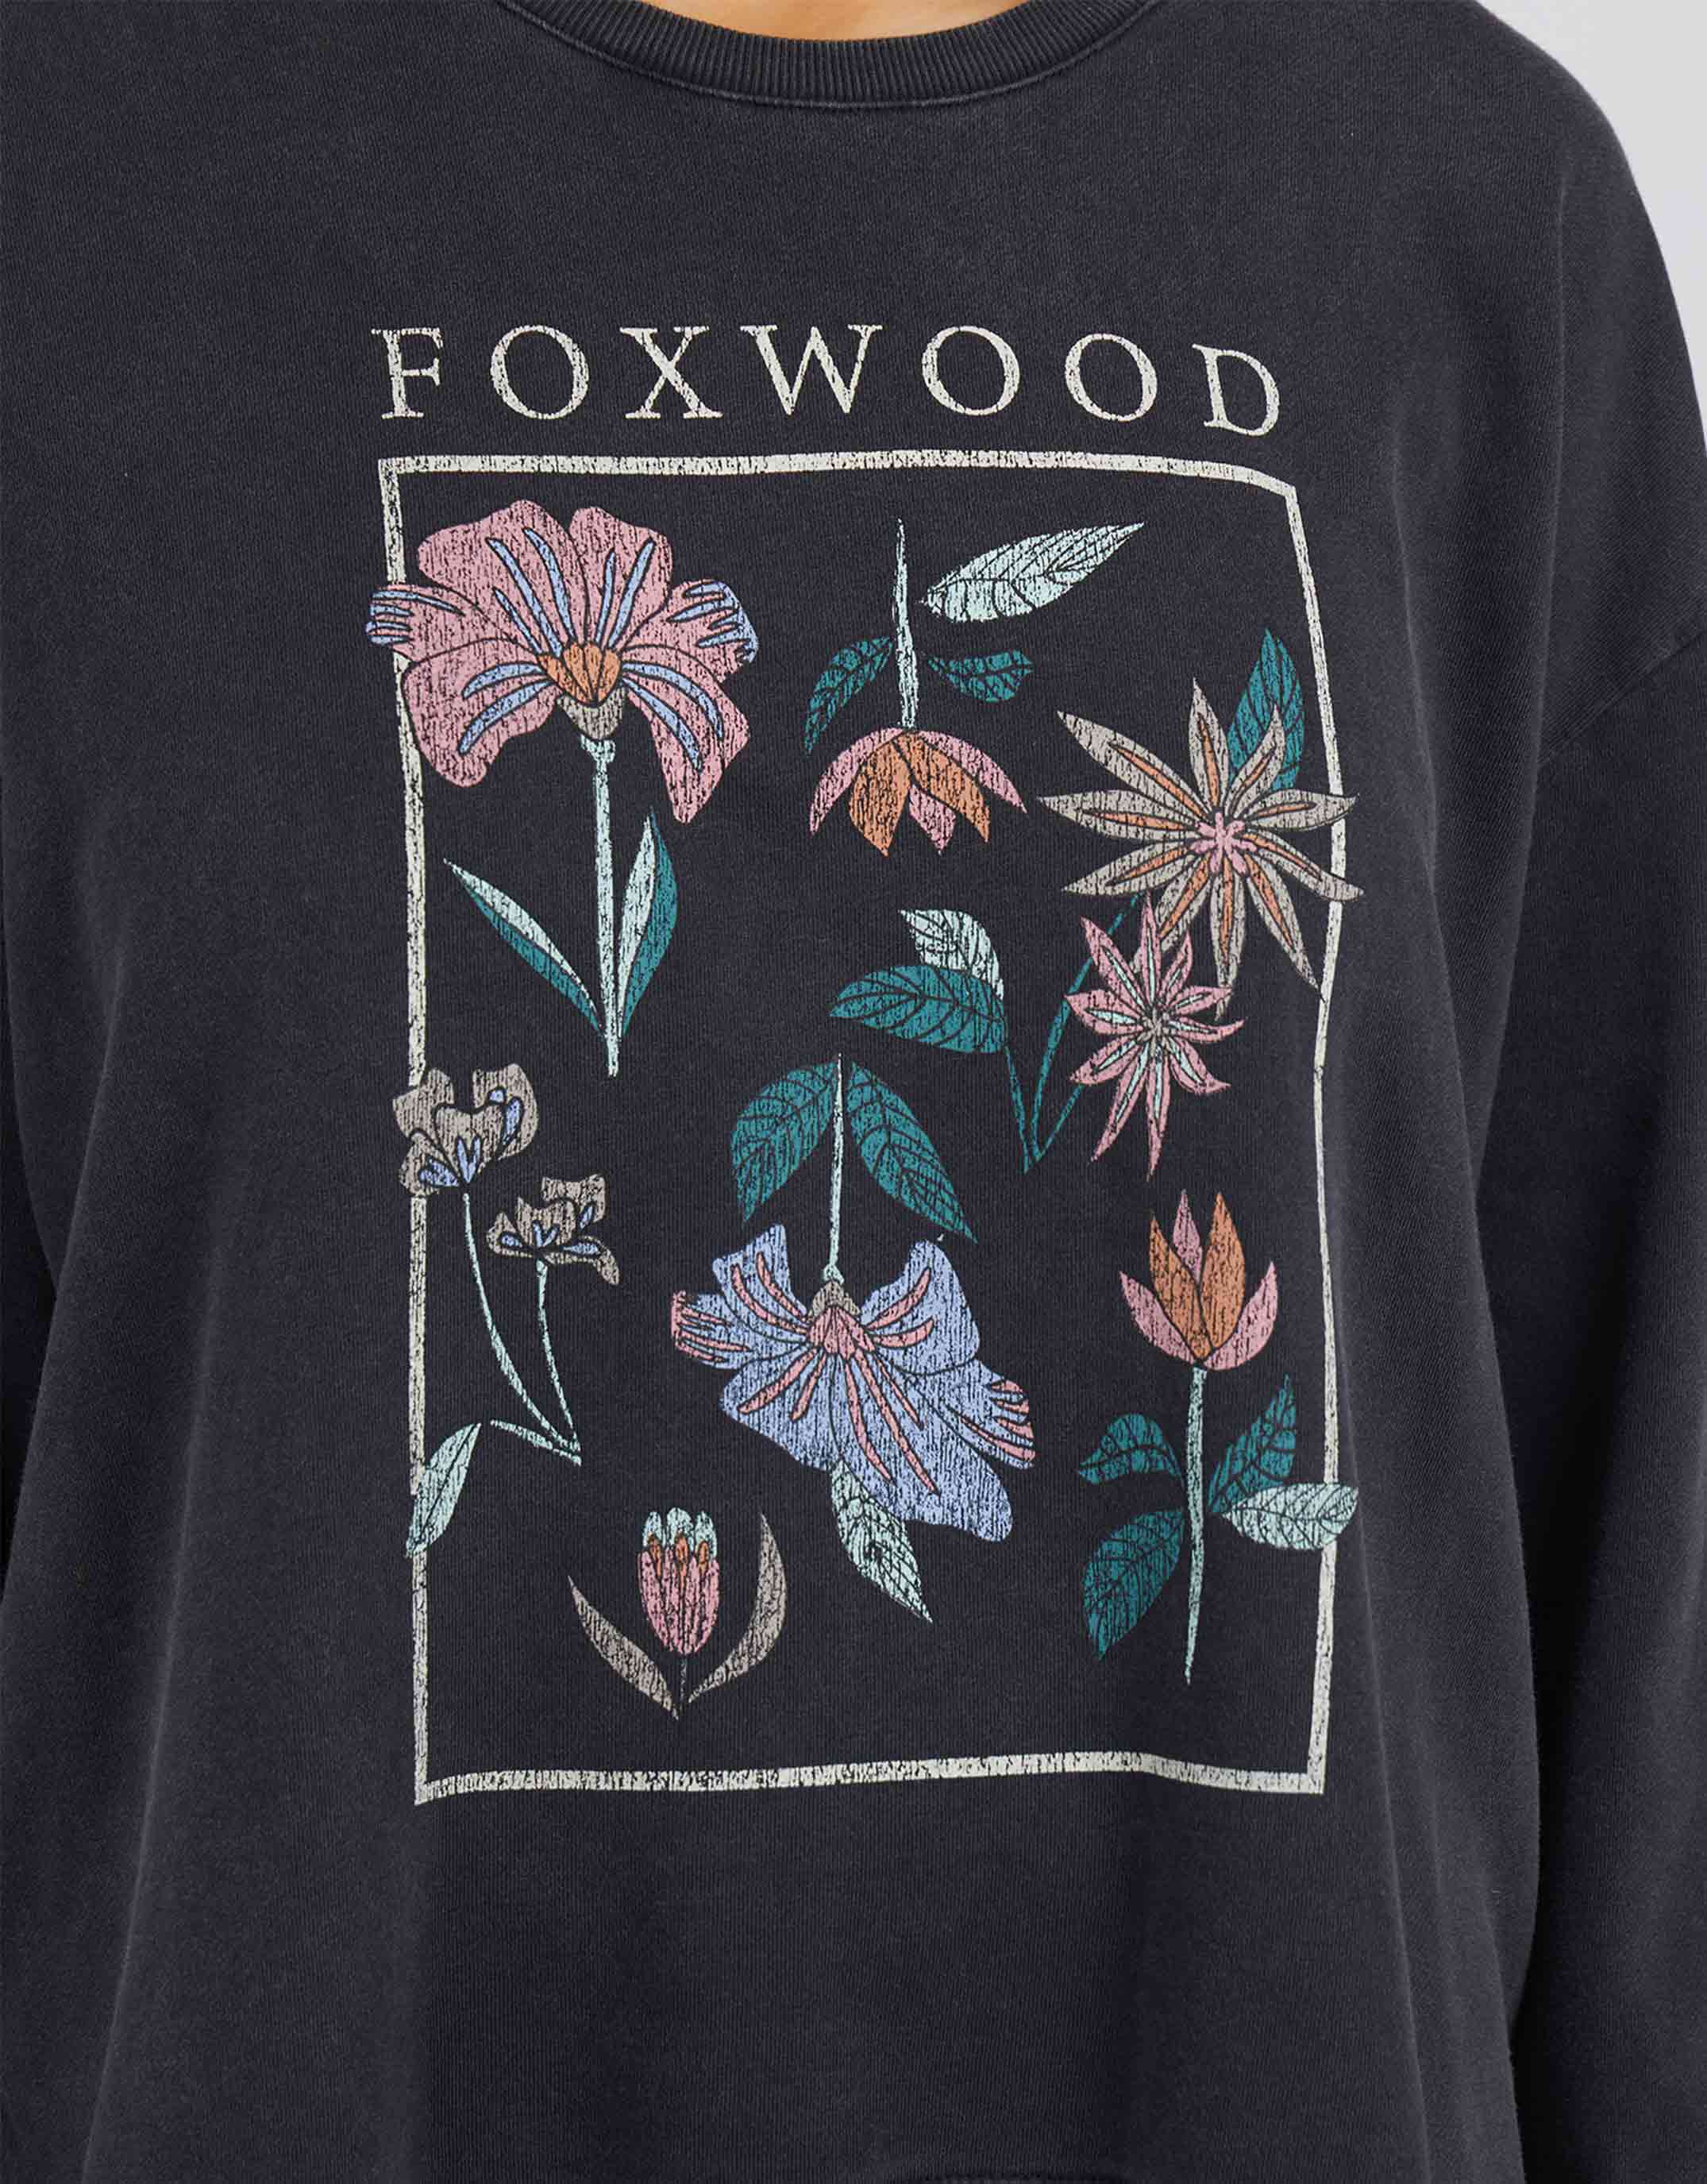 foxwood-wild-flower-crew-washed-black-womens-clothing